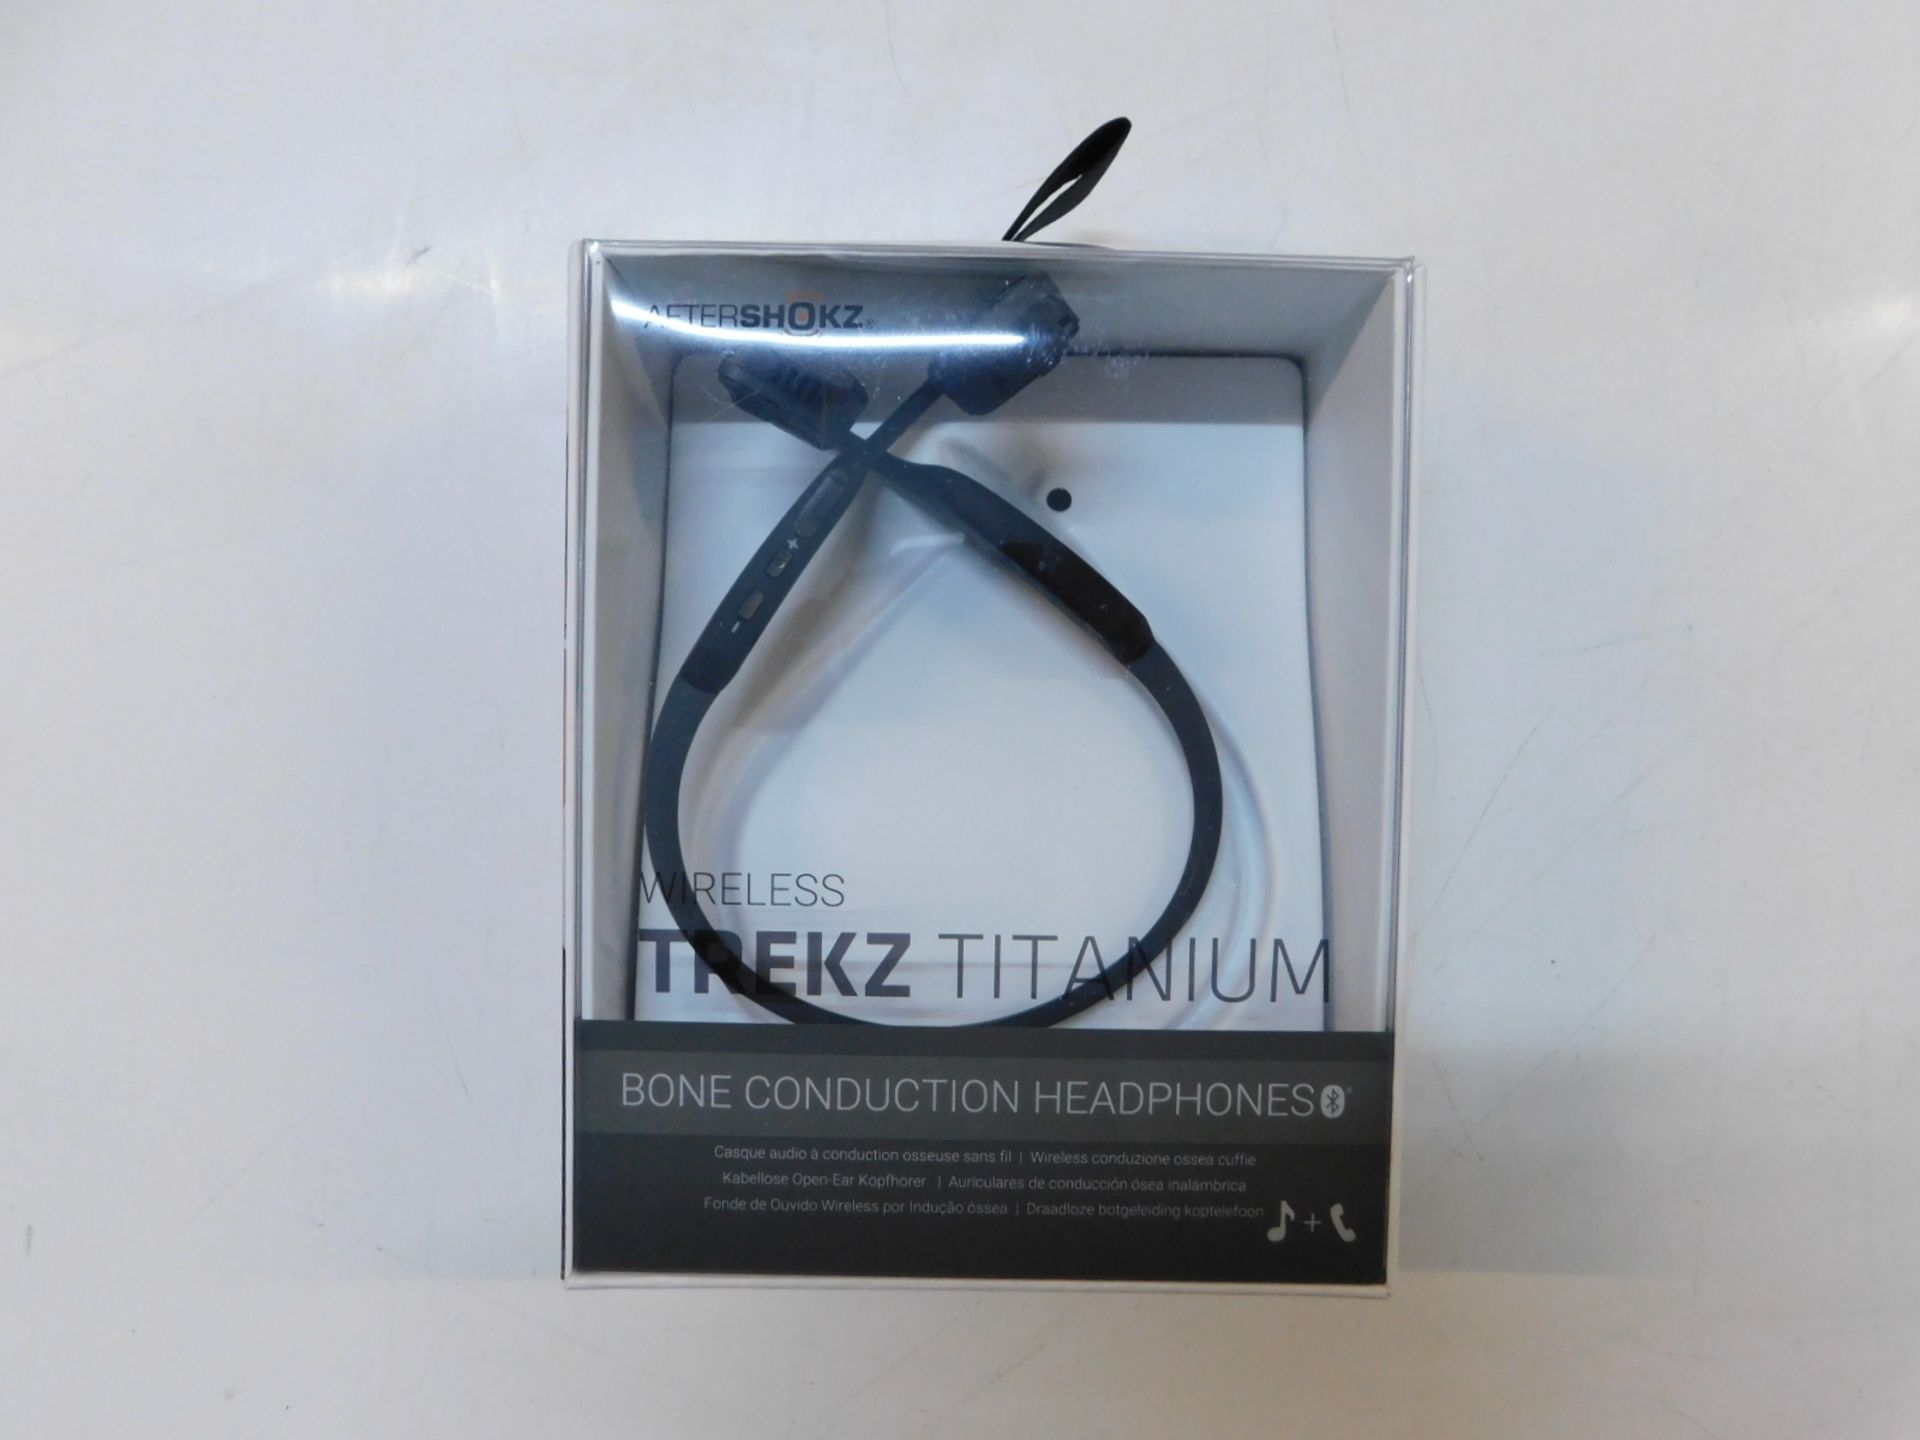 1 BOXED TREKZ TITANIUM BONE CONDUCTION WIRELESS HEADPHONES RRP Â£99.99